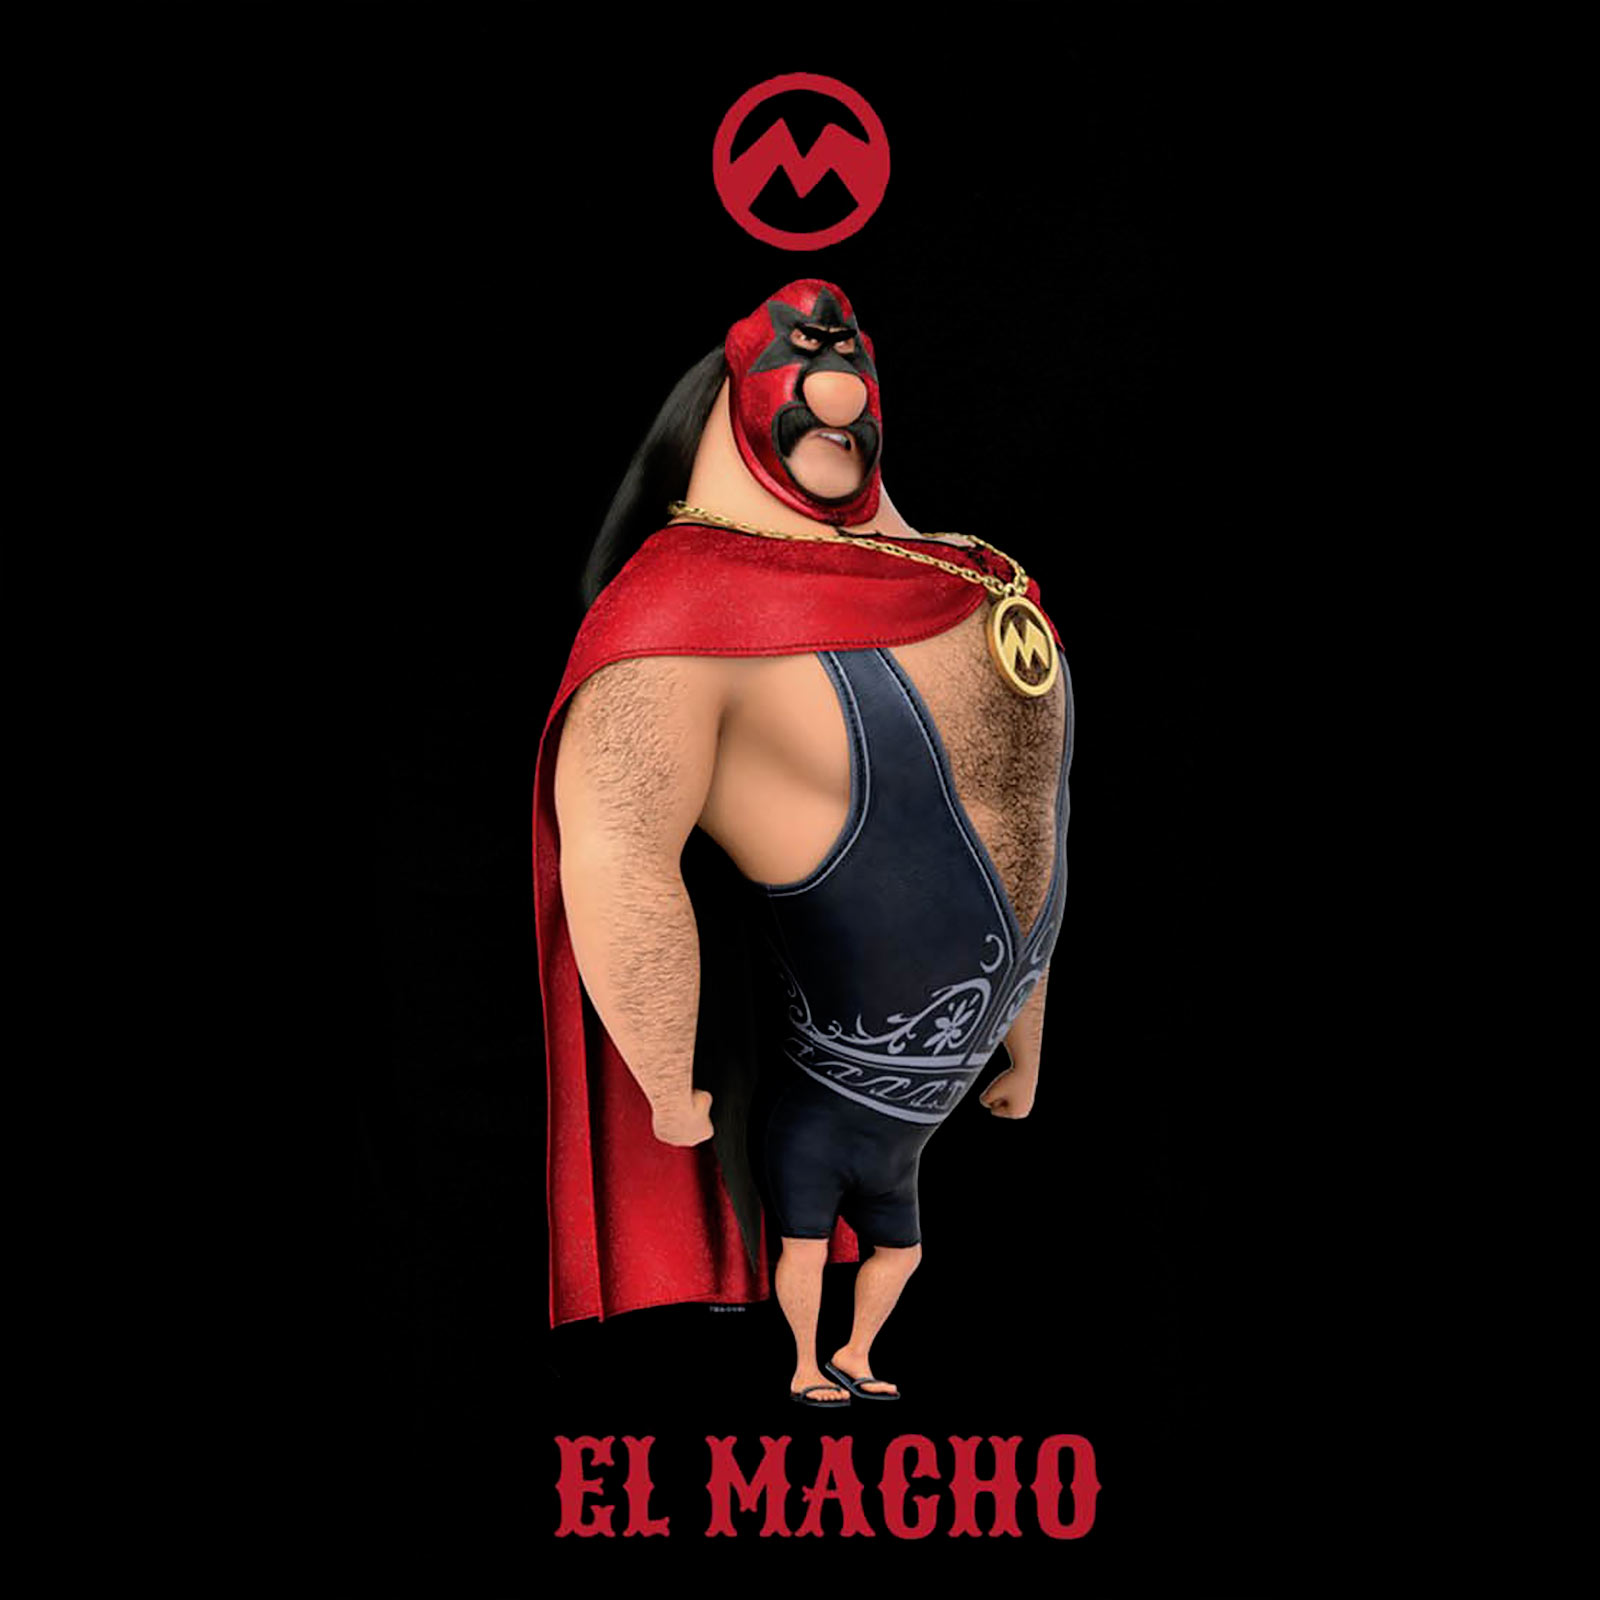 Minions - El Macho T-Shirt schwarz